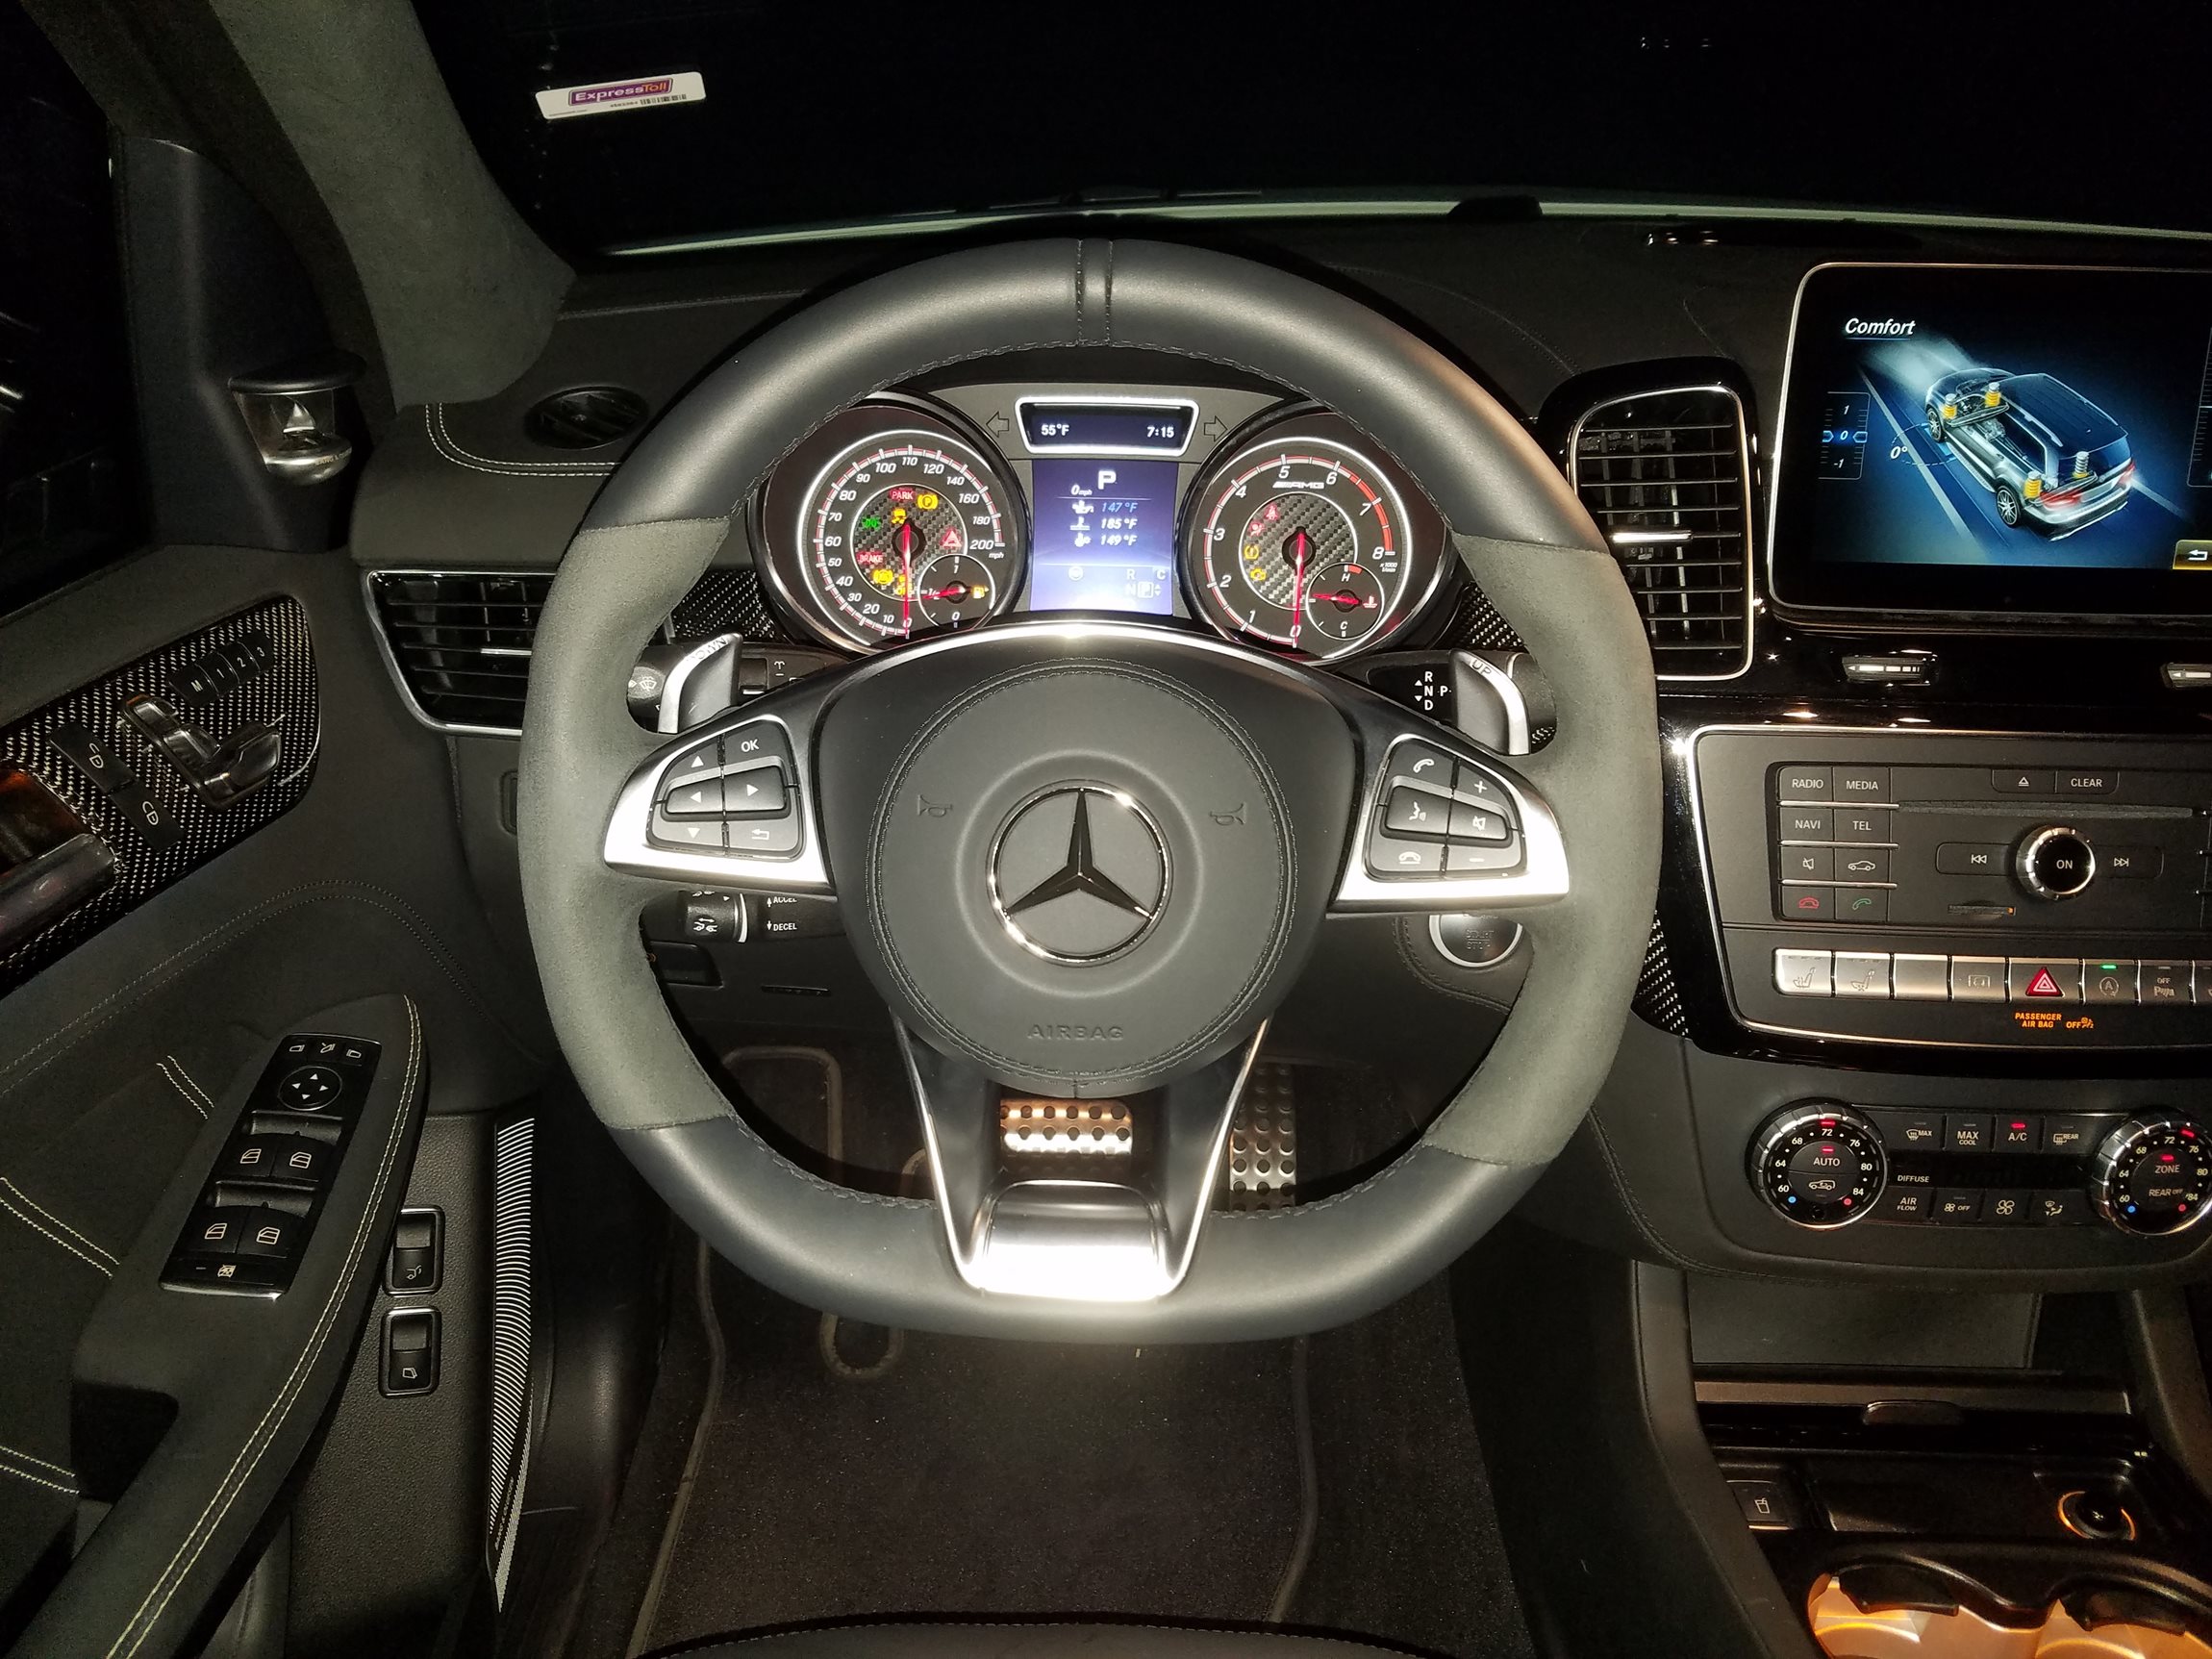 2019 Mercedes Amg Gls63 Interior By Matt Barnes50